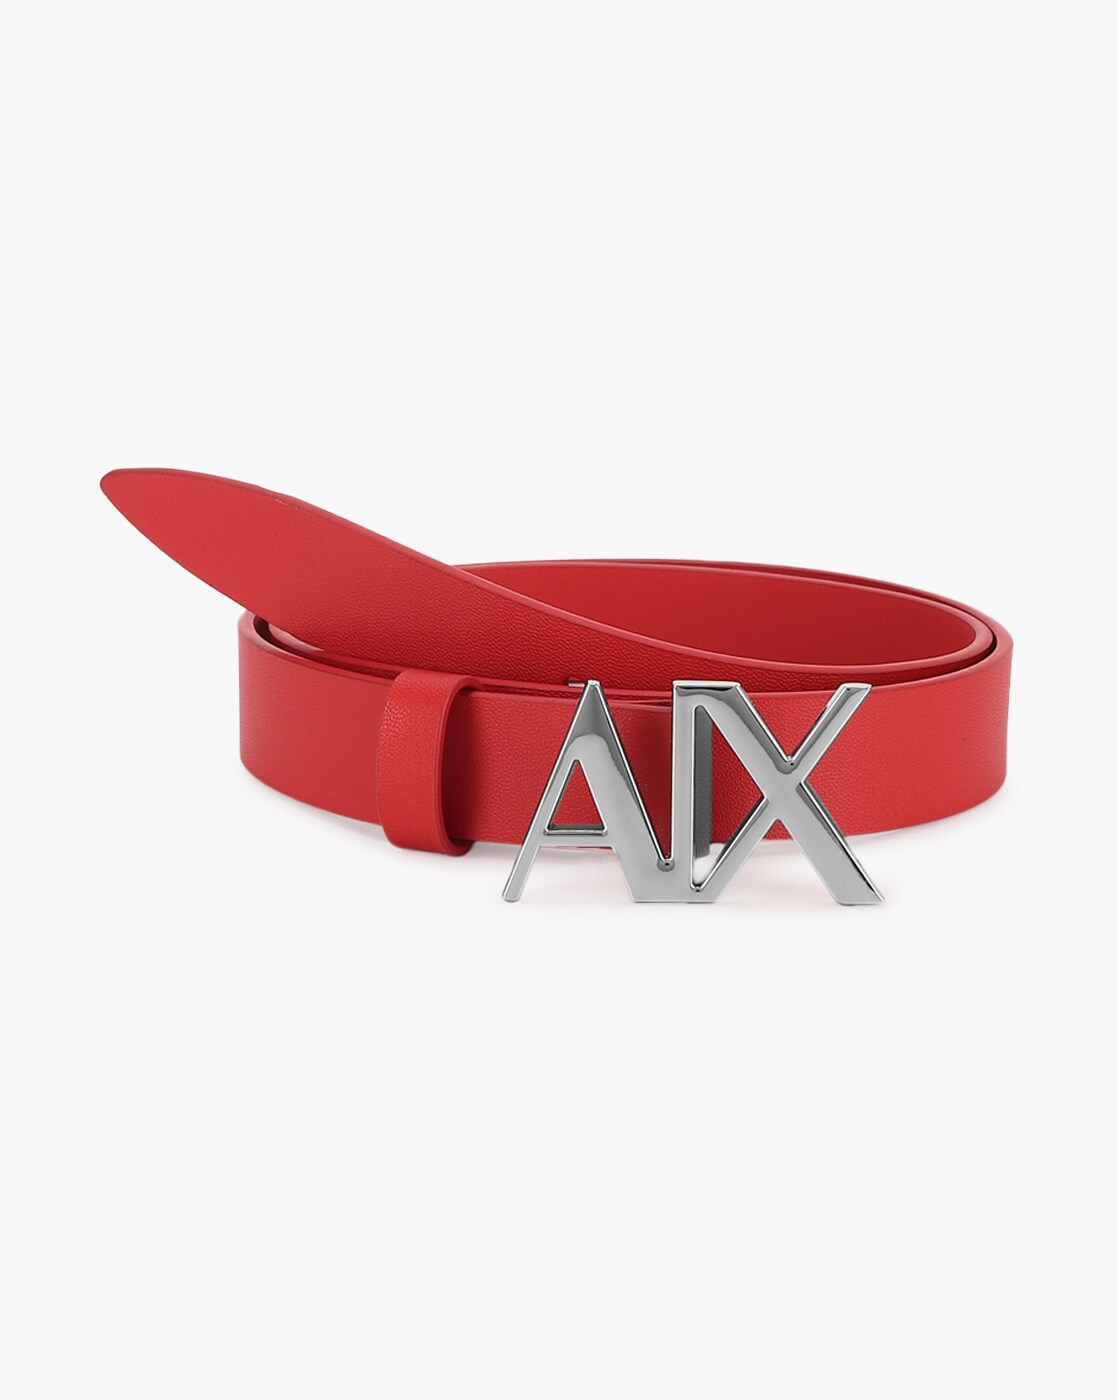 red armani exchange belt